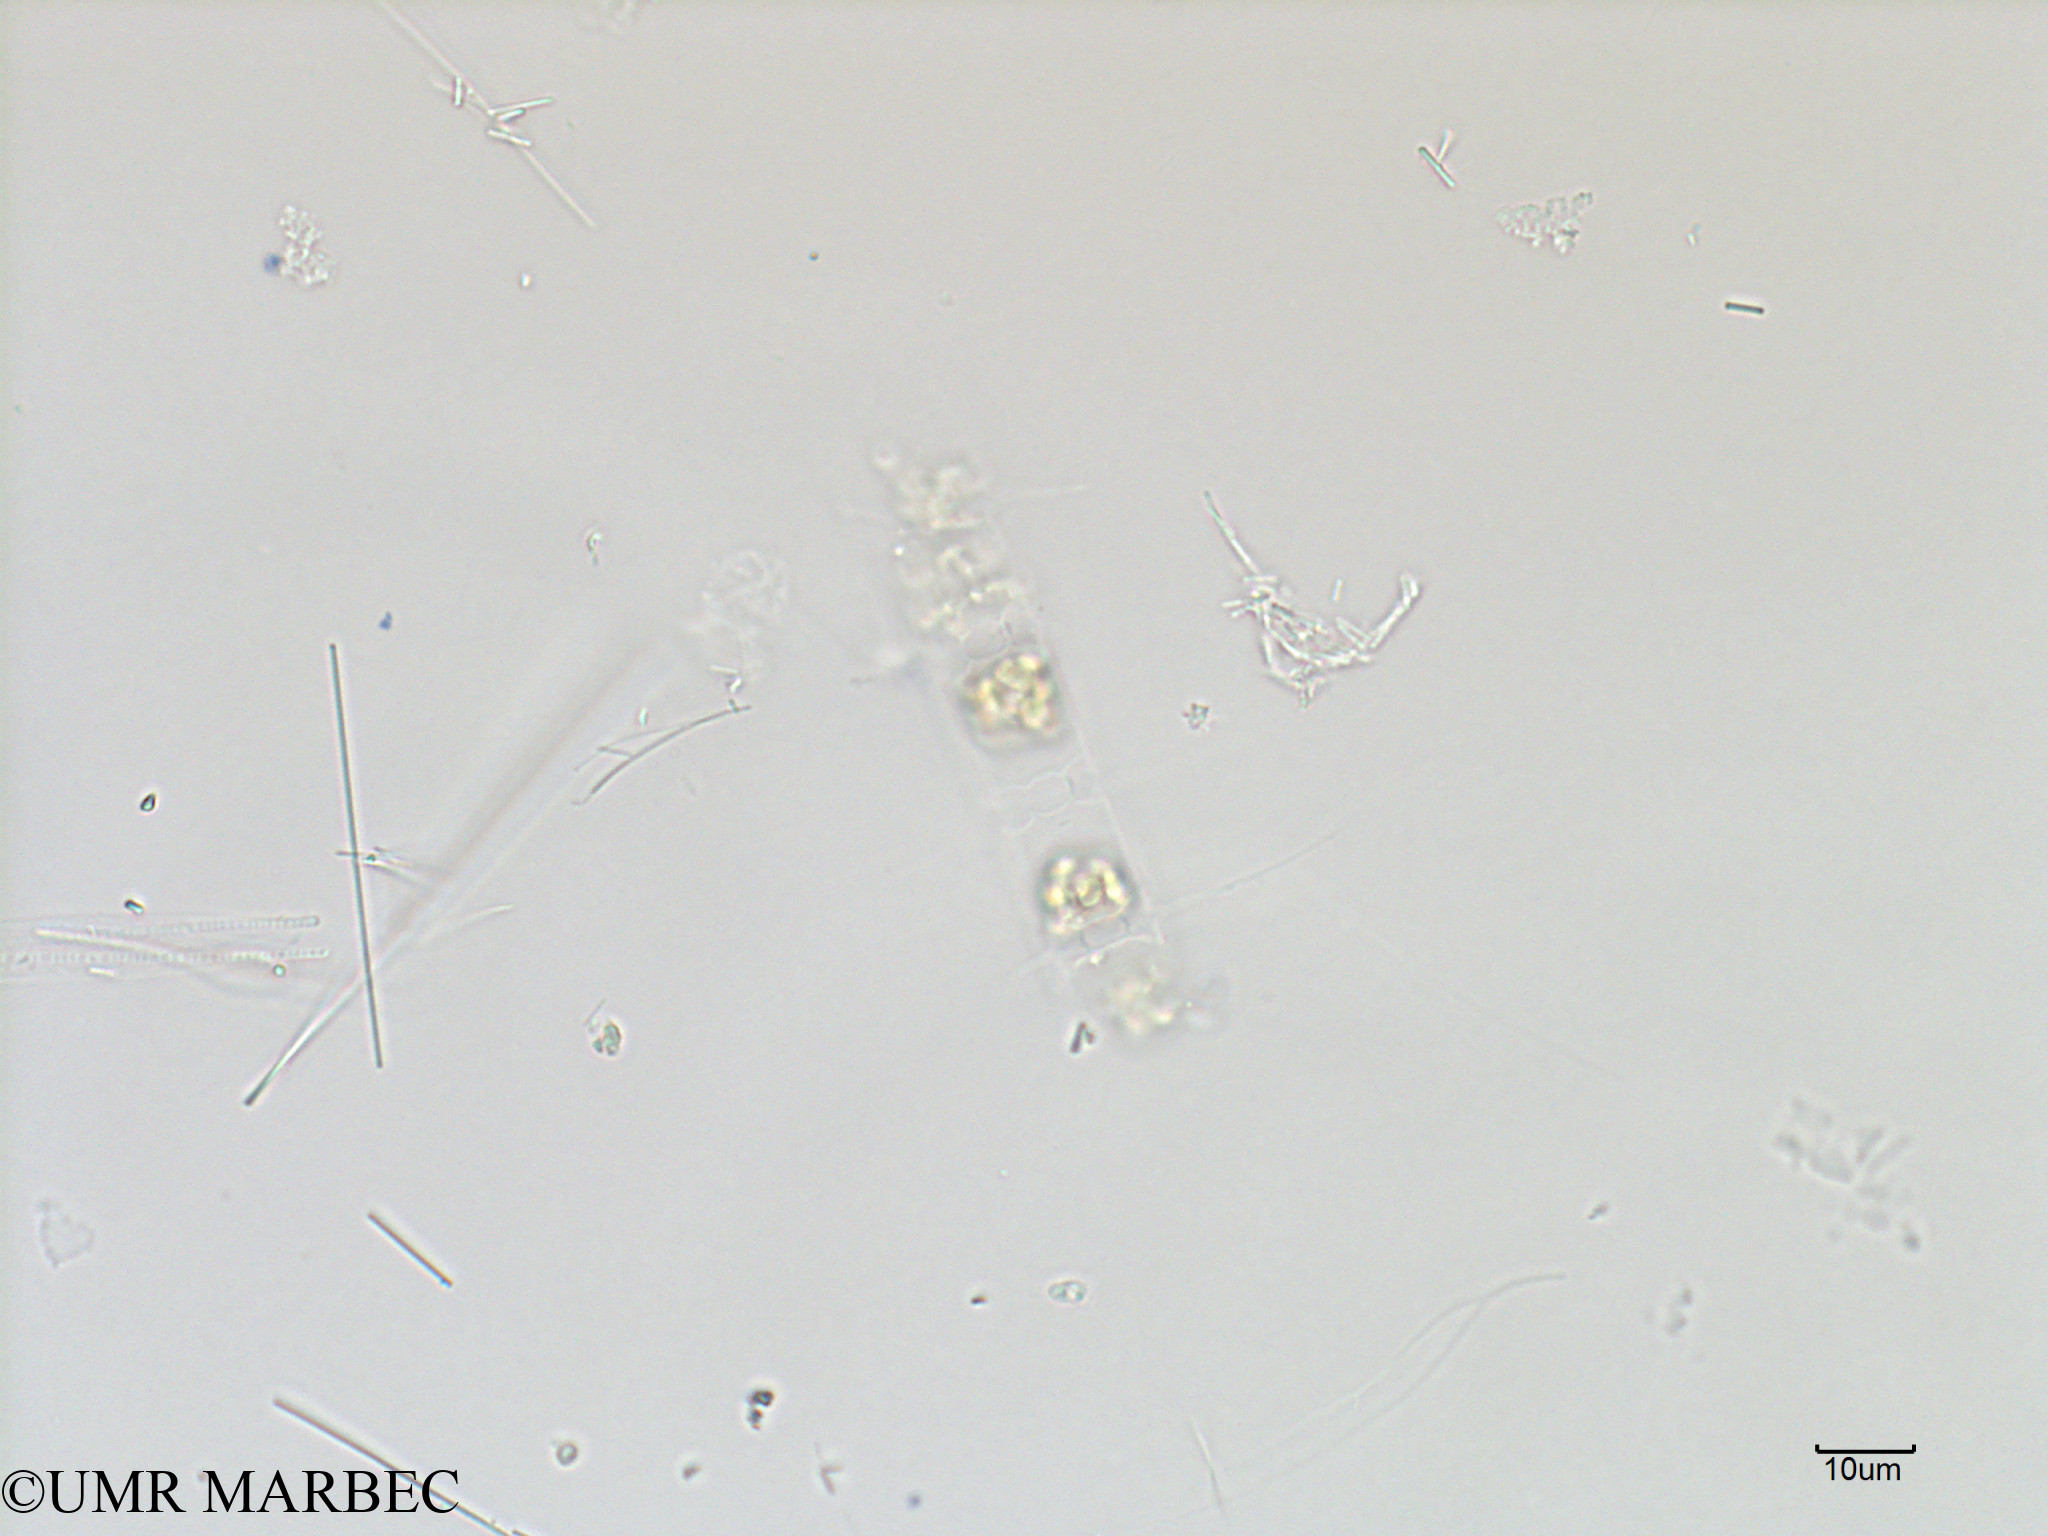 phyto/Scattered_Islands/iles_glorieuses/SIREME May 2016/Bacteriastrum furcatum (ancien Bacteriastrum sp10 -SIREME-Glorieuses2016-GLO6surf-271016-Bacteriastrum spb-5)(copy).jpg